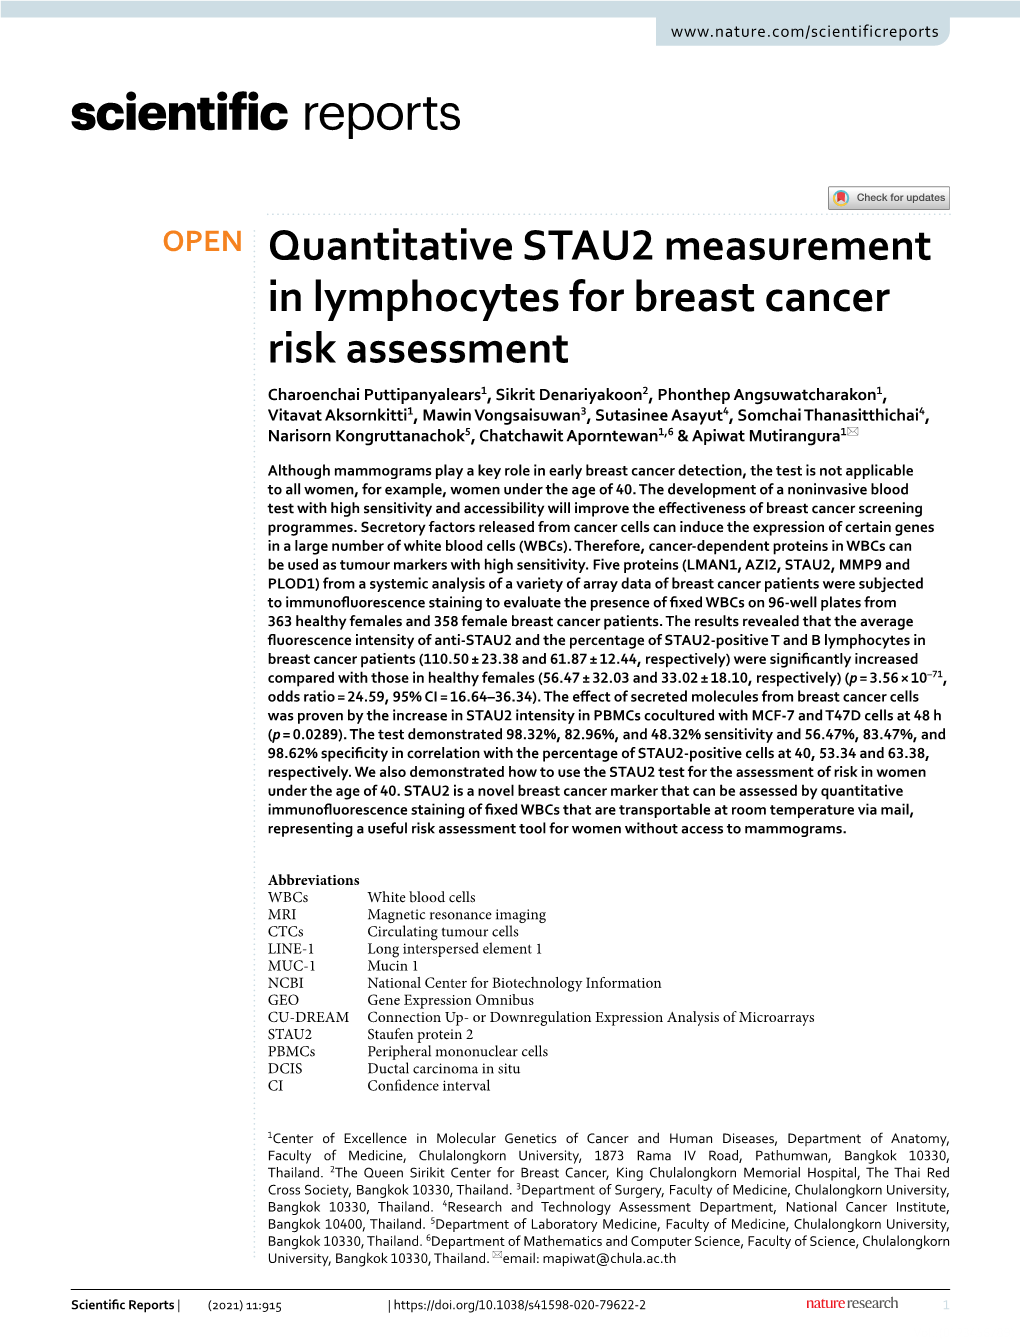 Quantitative STAU2 Measurement in Lymphocytes for Breast Cancer Risk